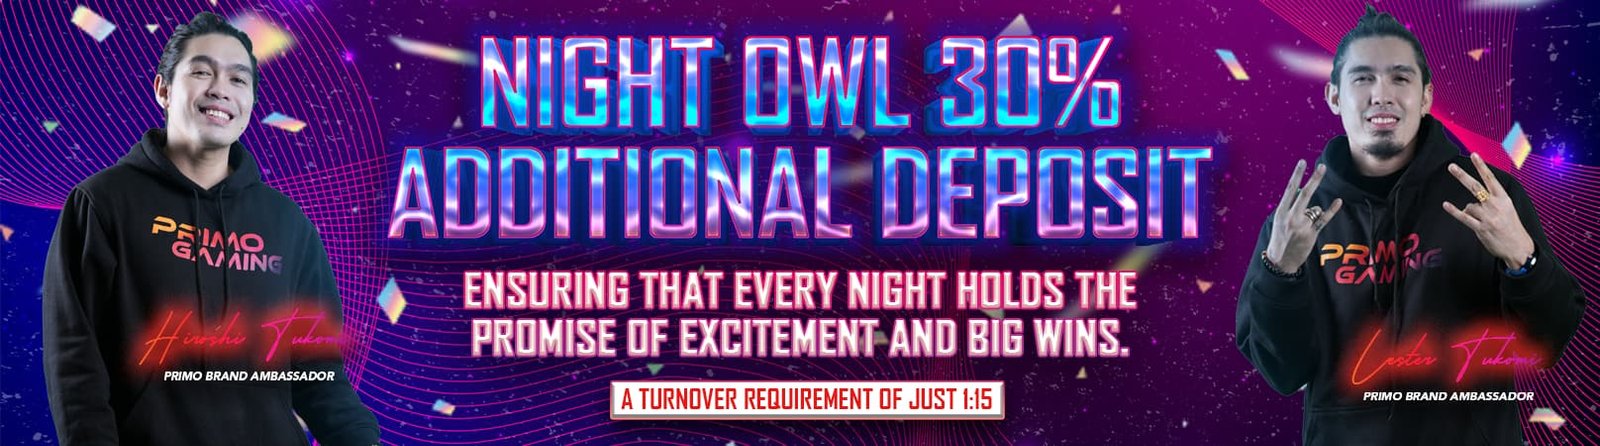 Night Owl 30_ Additional Deposit